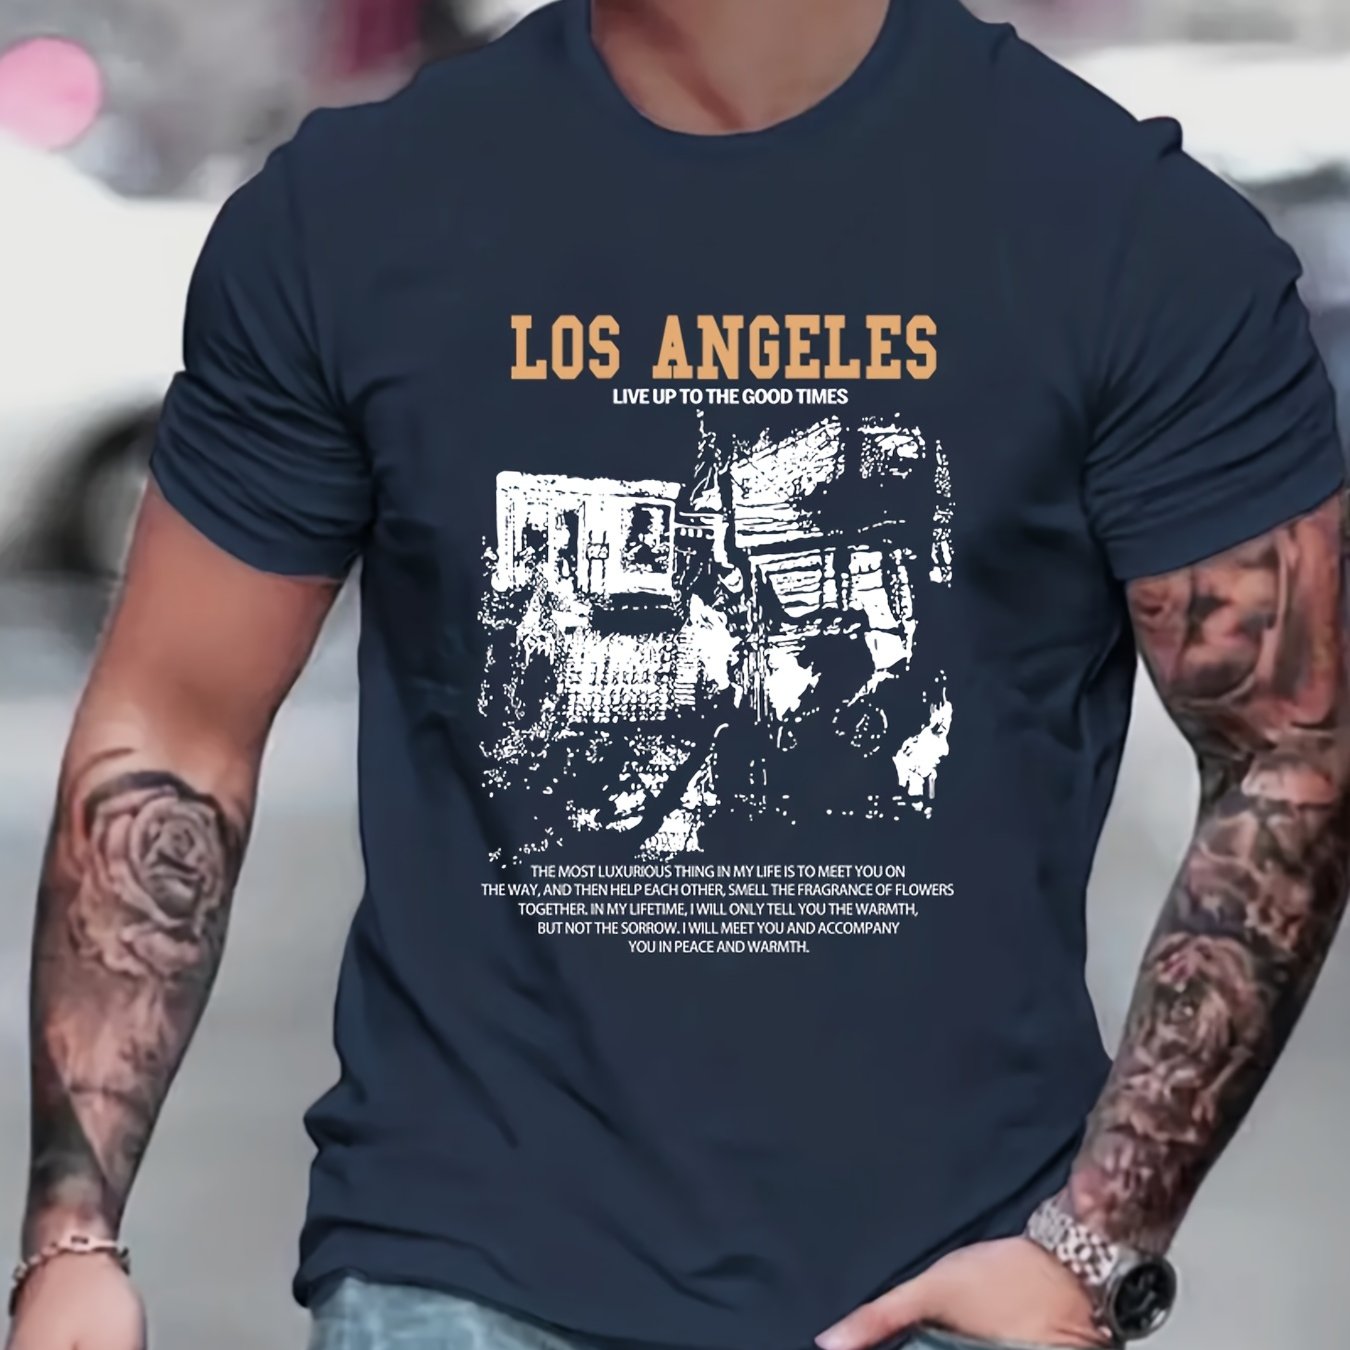 Retro Style Los Angeles Letter Pattern Print Men's Comfy T Shirt ...